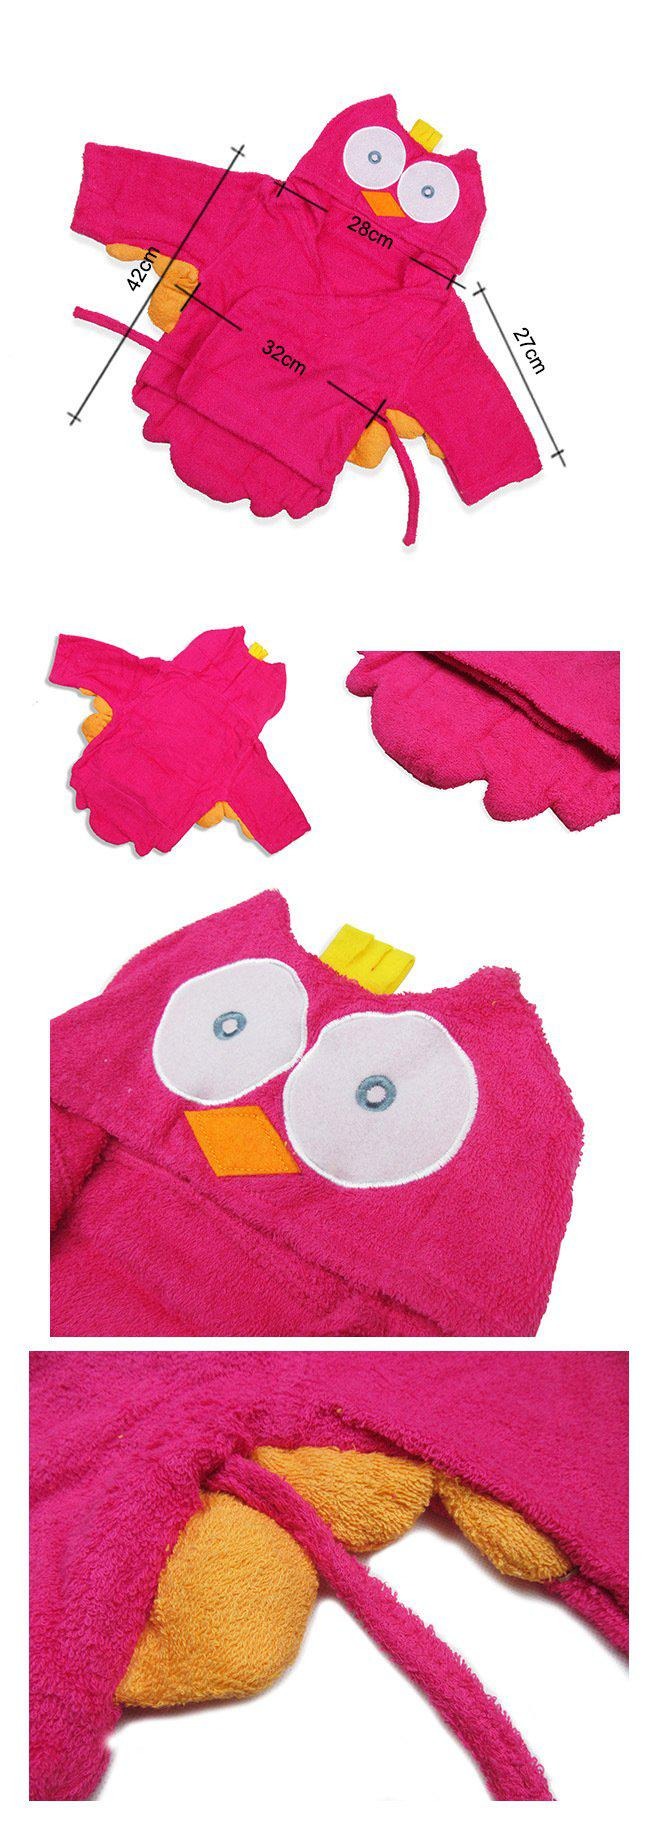 Baby Hooded Bathrobe - Red Owl - Just Kidding Store